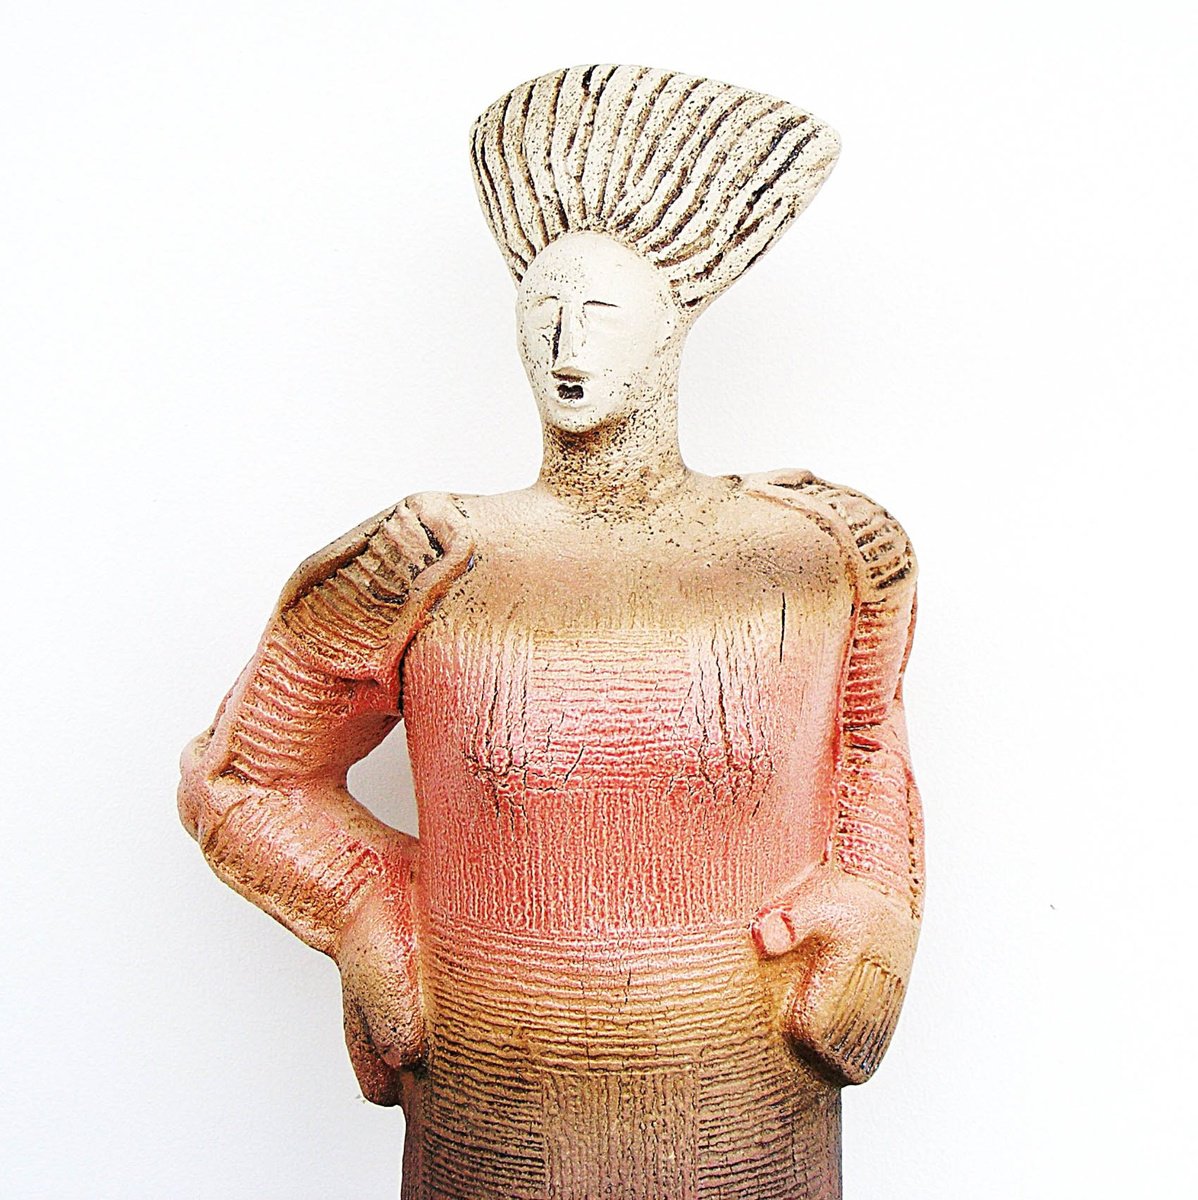 Ceramic Sculpture - Persephone, Goddess of Spring by Dick Martin